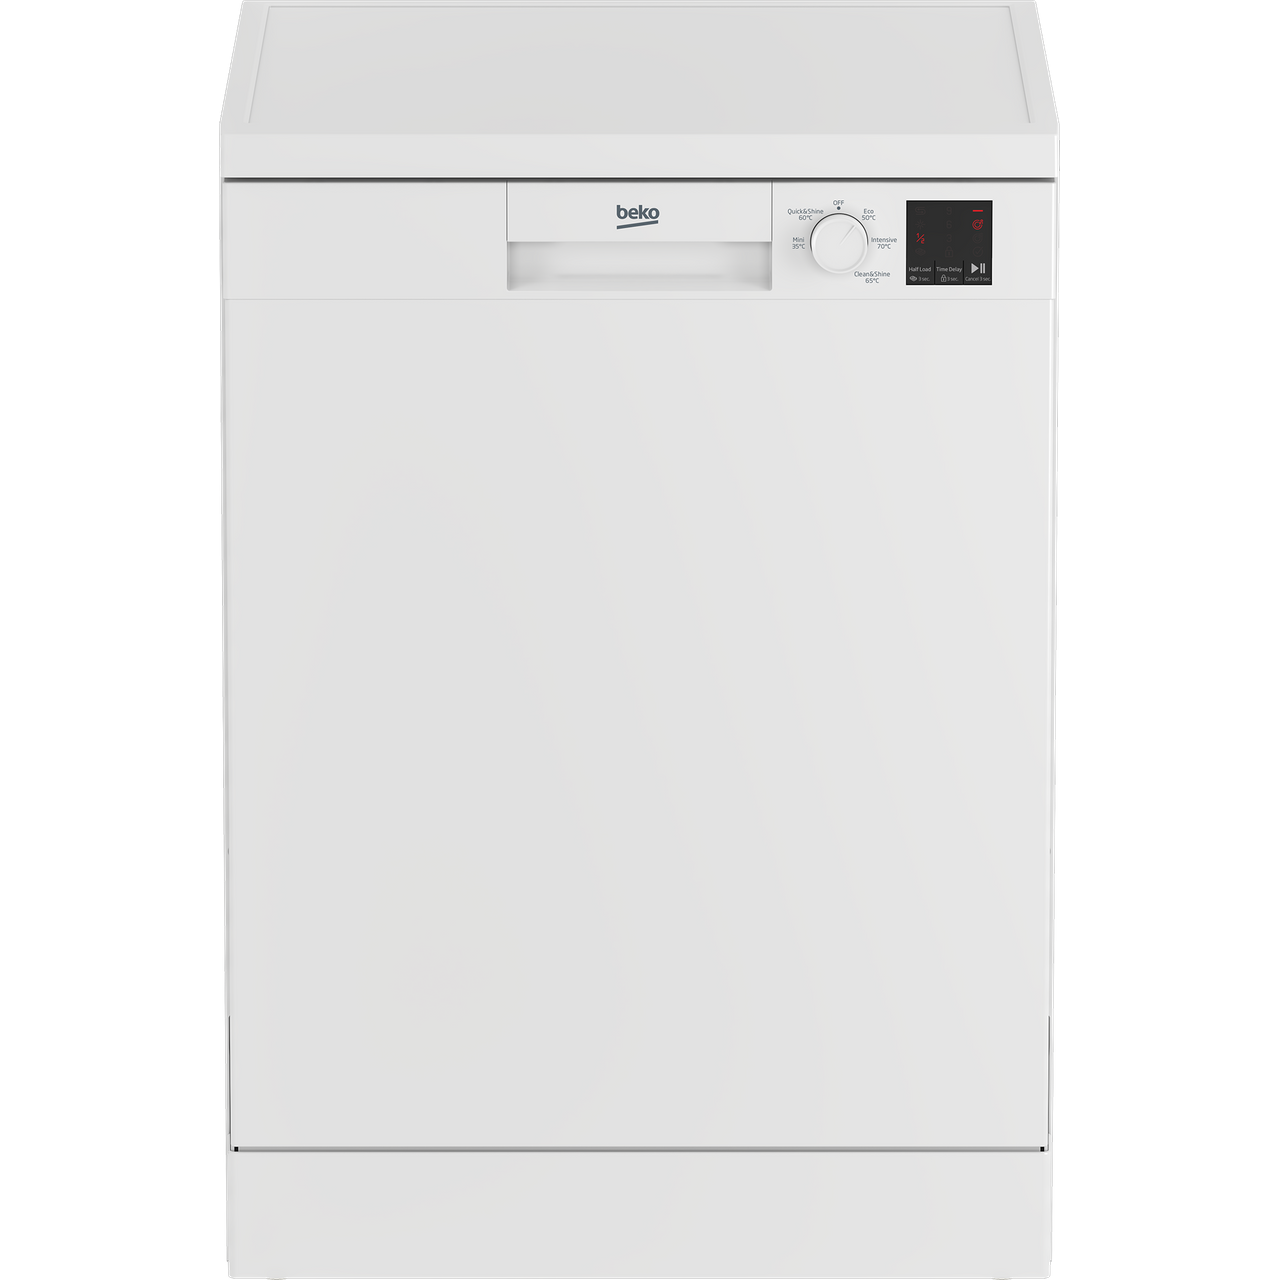 Beko DVN05R20W Standard Dishwasher Reviews - Updated February 2021